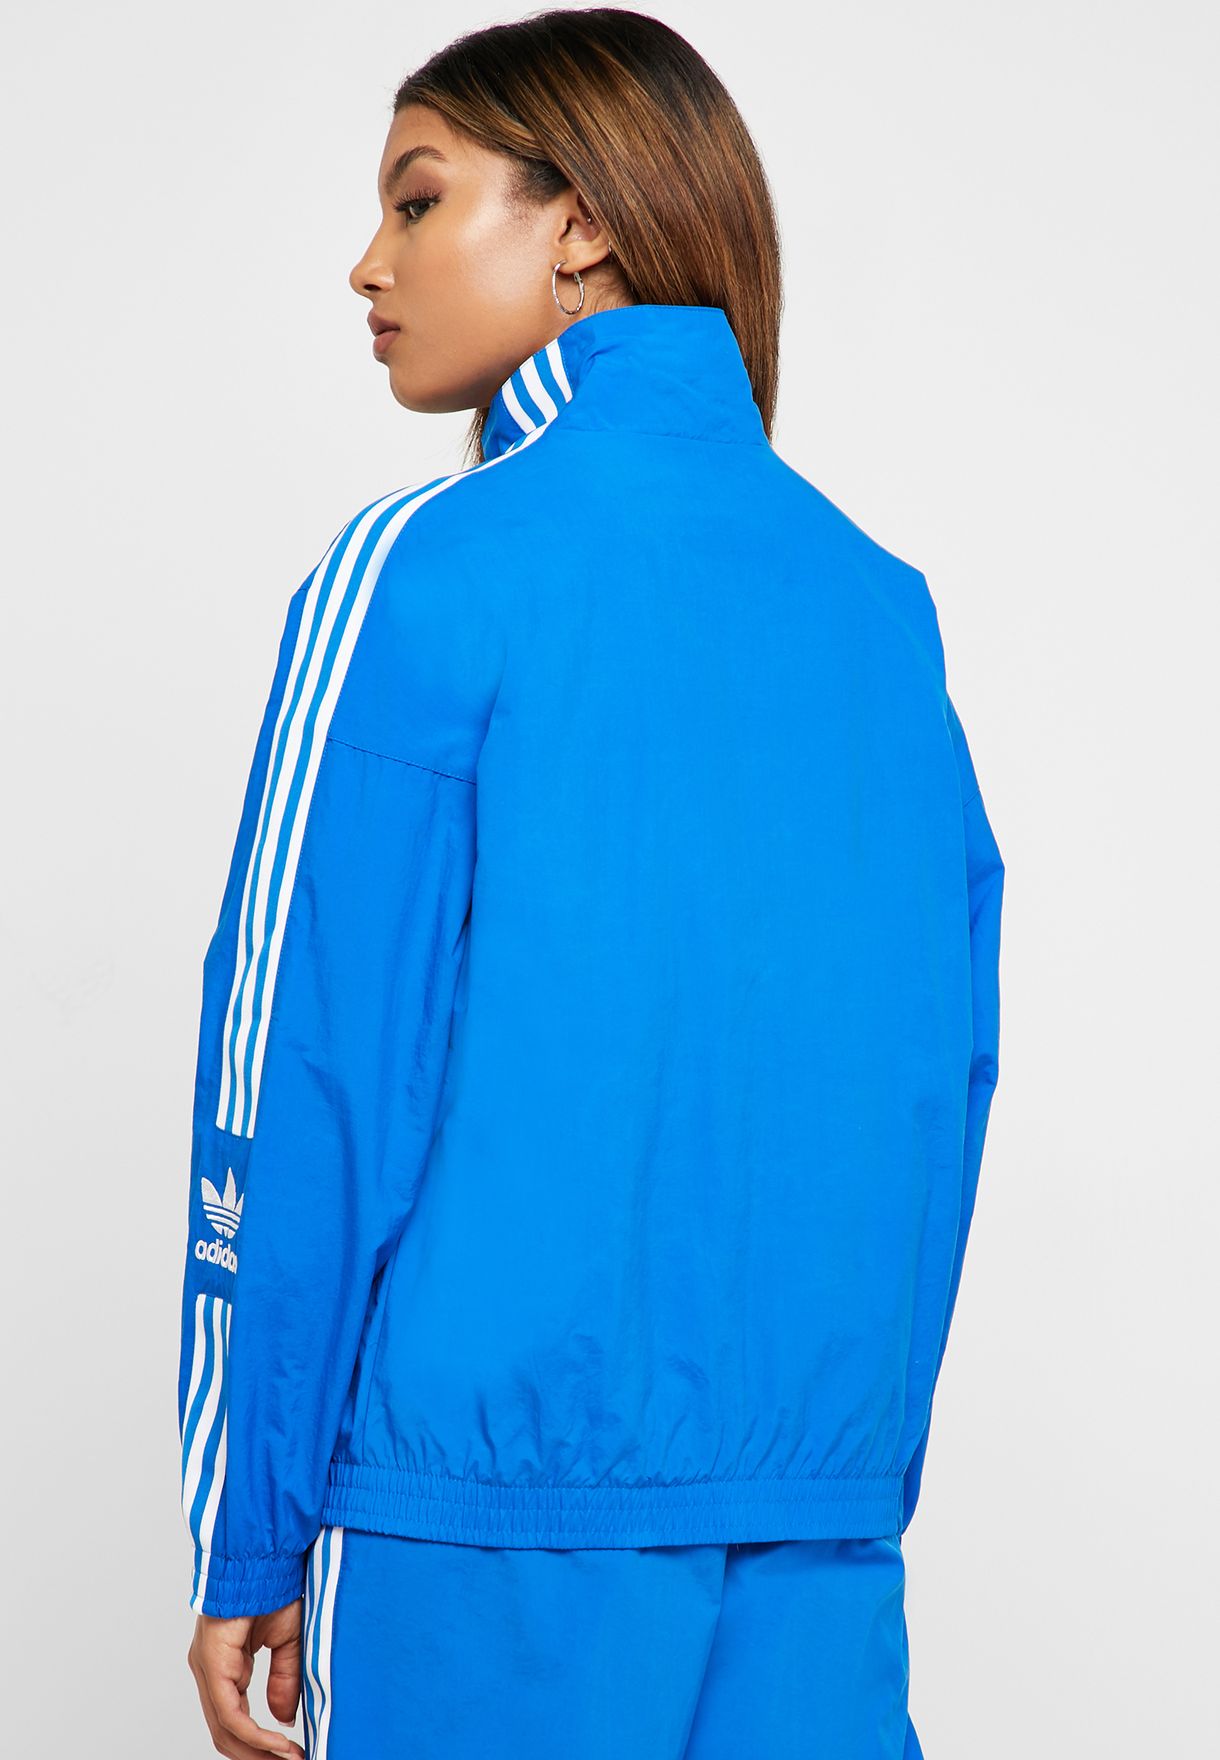 adidas original blue jacket